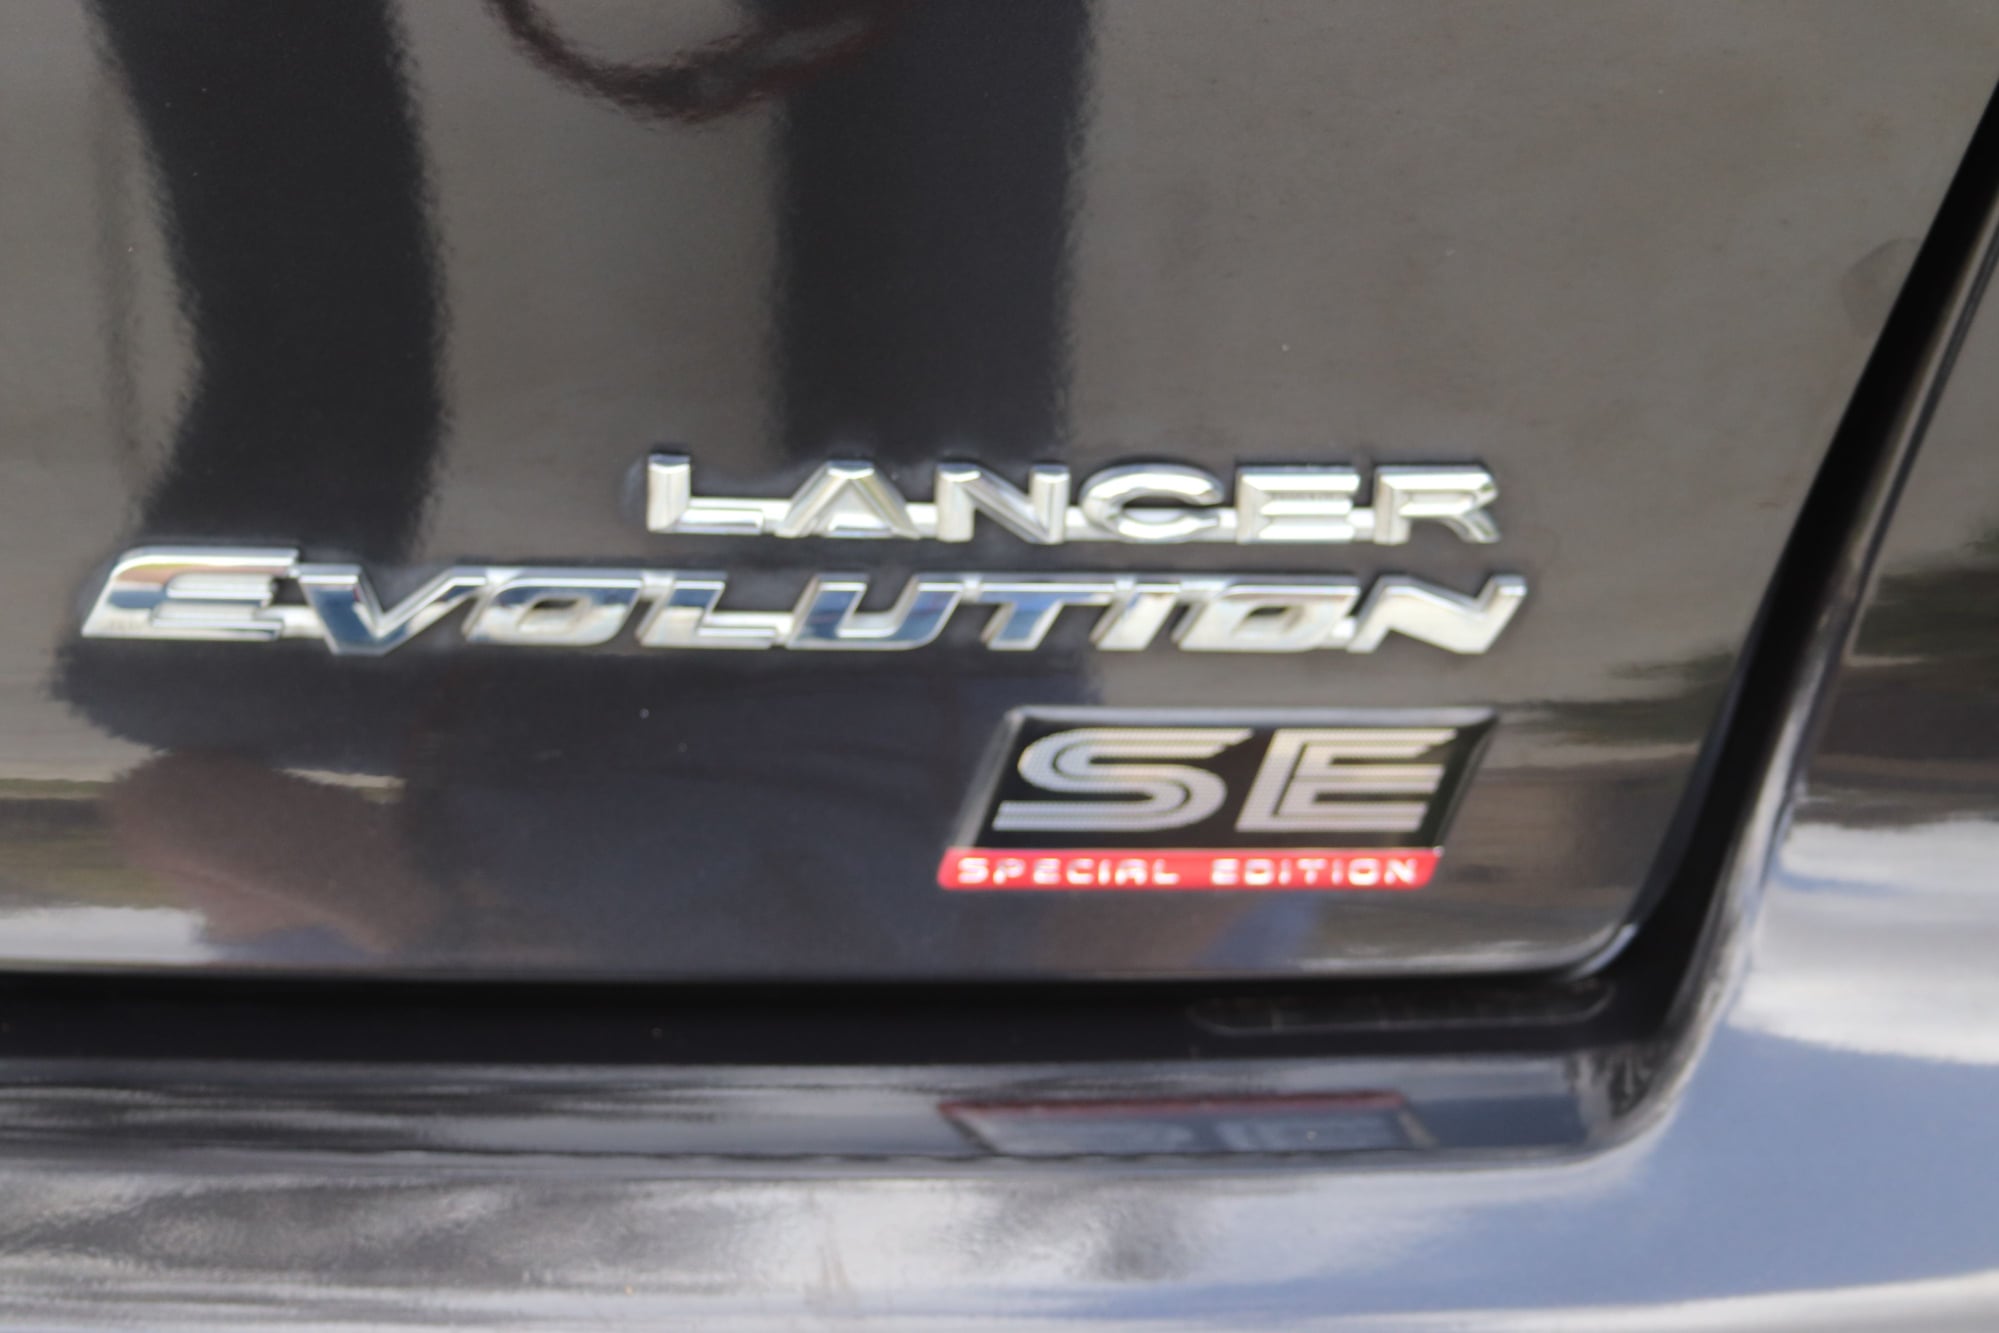 2010 Mitsubishi Lancer Evolution - 2010 Mitsubishi Lancer Evolution SE (47,717 miles) One owner. No mods. All original. - Used - VIN ja32w6fv3au034102 - 47,717 Miles - 4 cyl - AWD - Automatic - Sedan - Black - San Antonio, TX 78213, United States